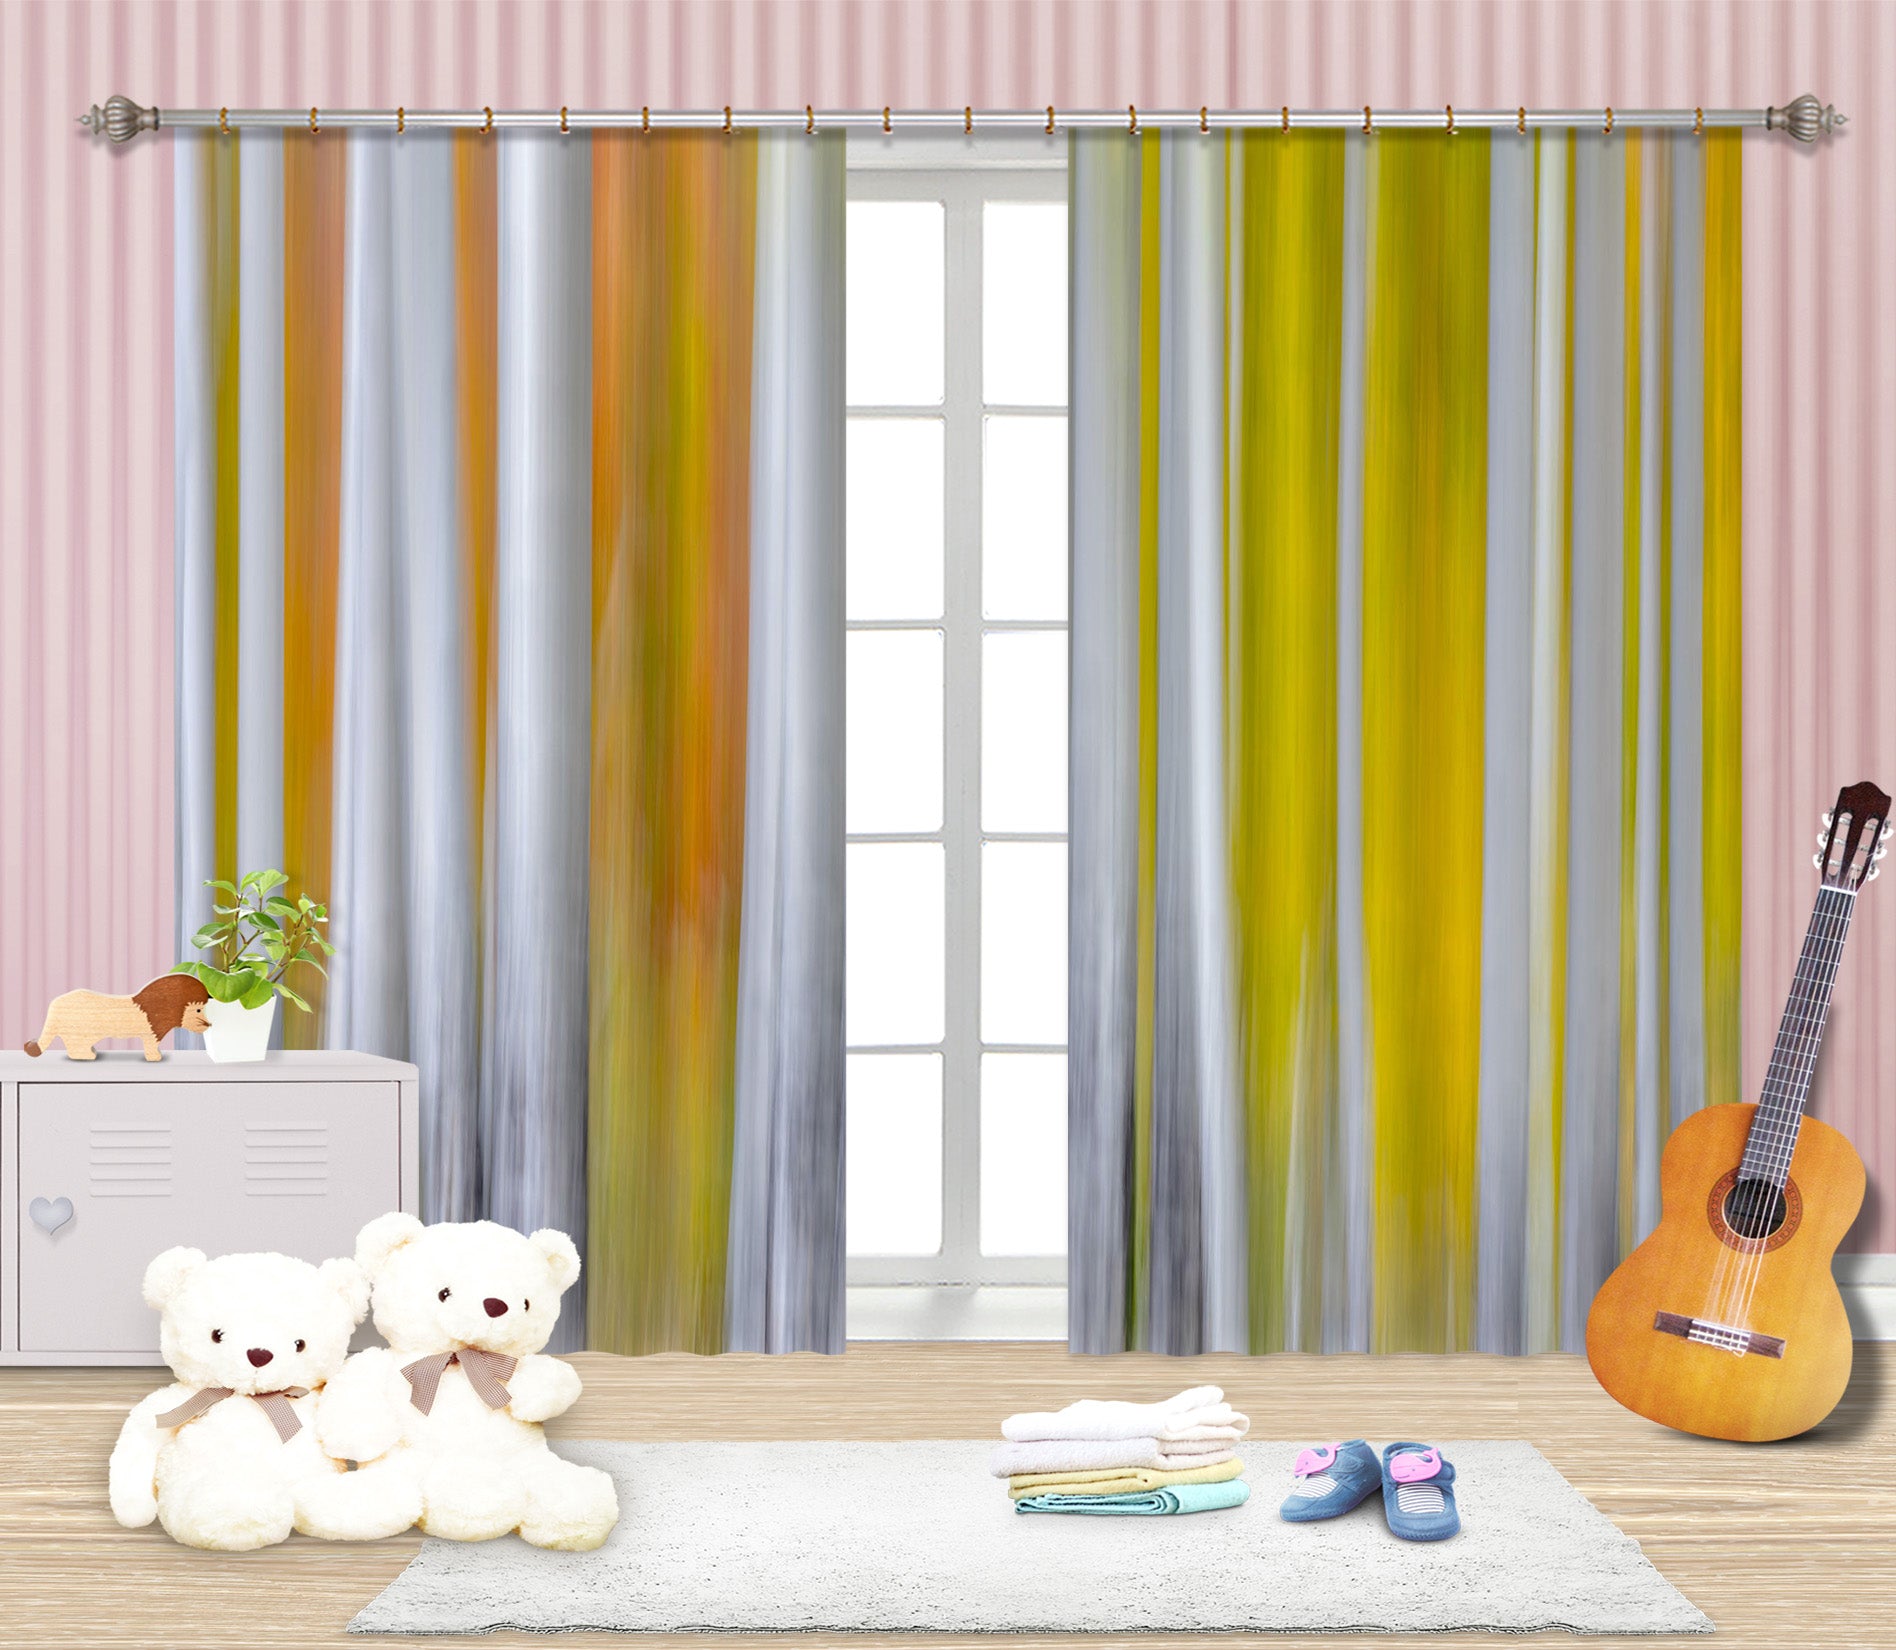 3D Autumn Forest 170 Marco Carmassi Curtain Curtains Drapes